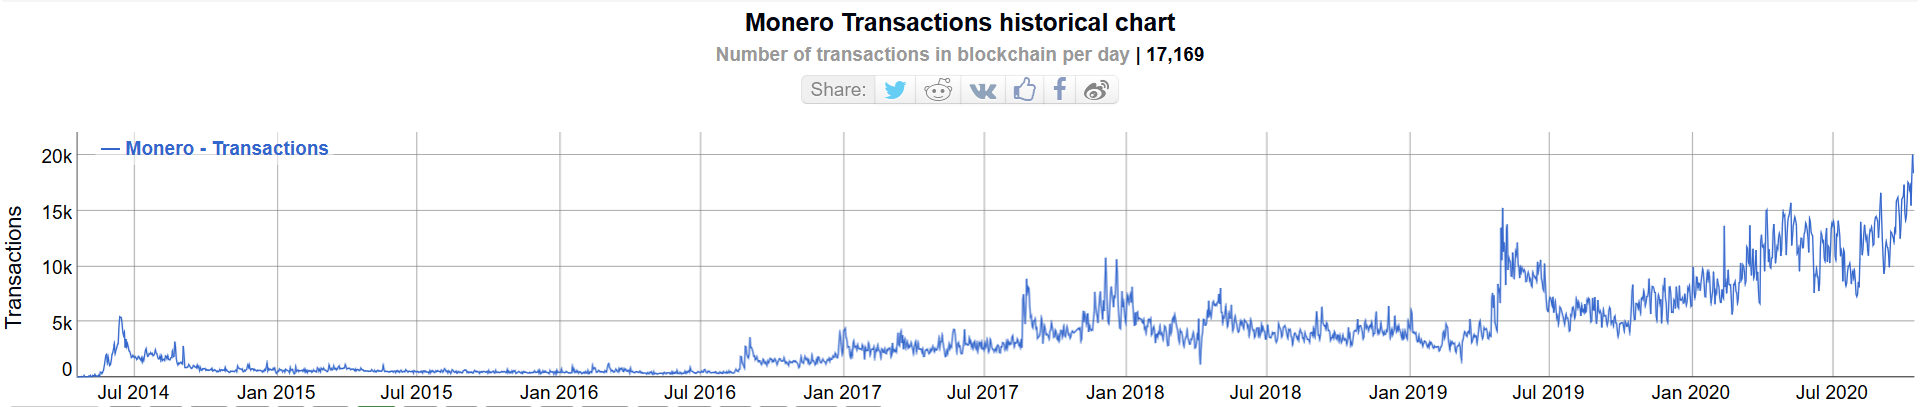 Monero daily transaction chart